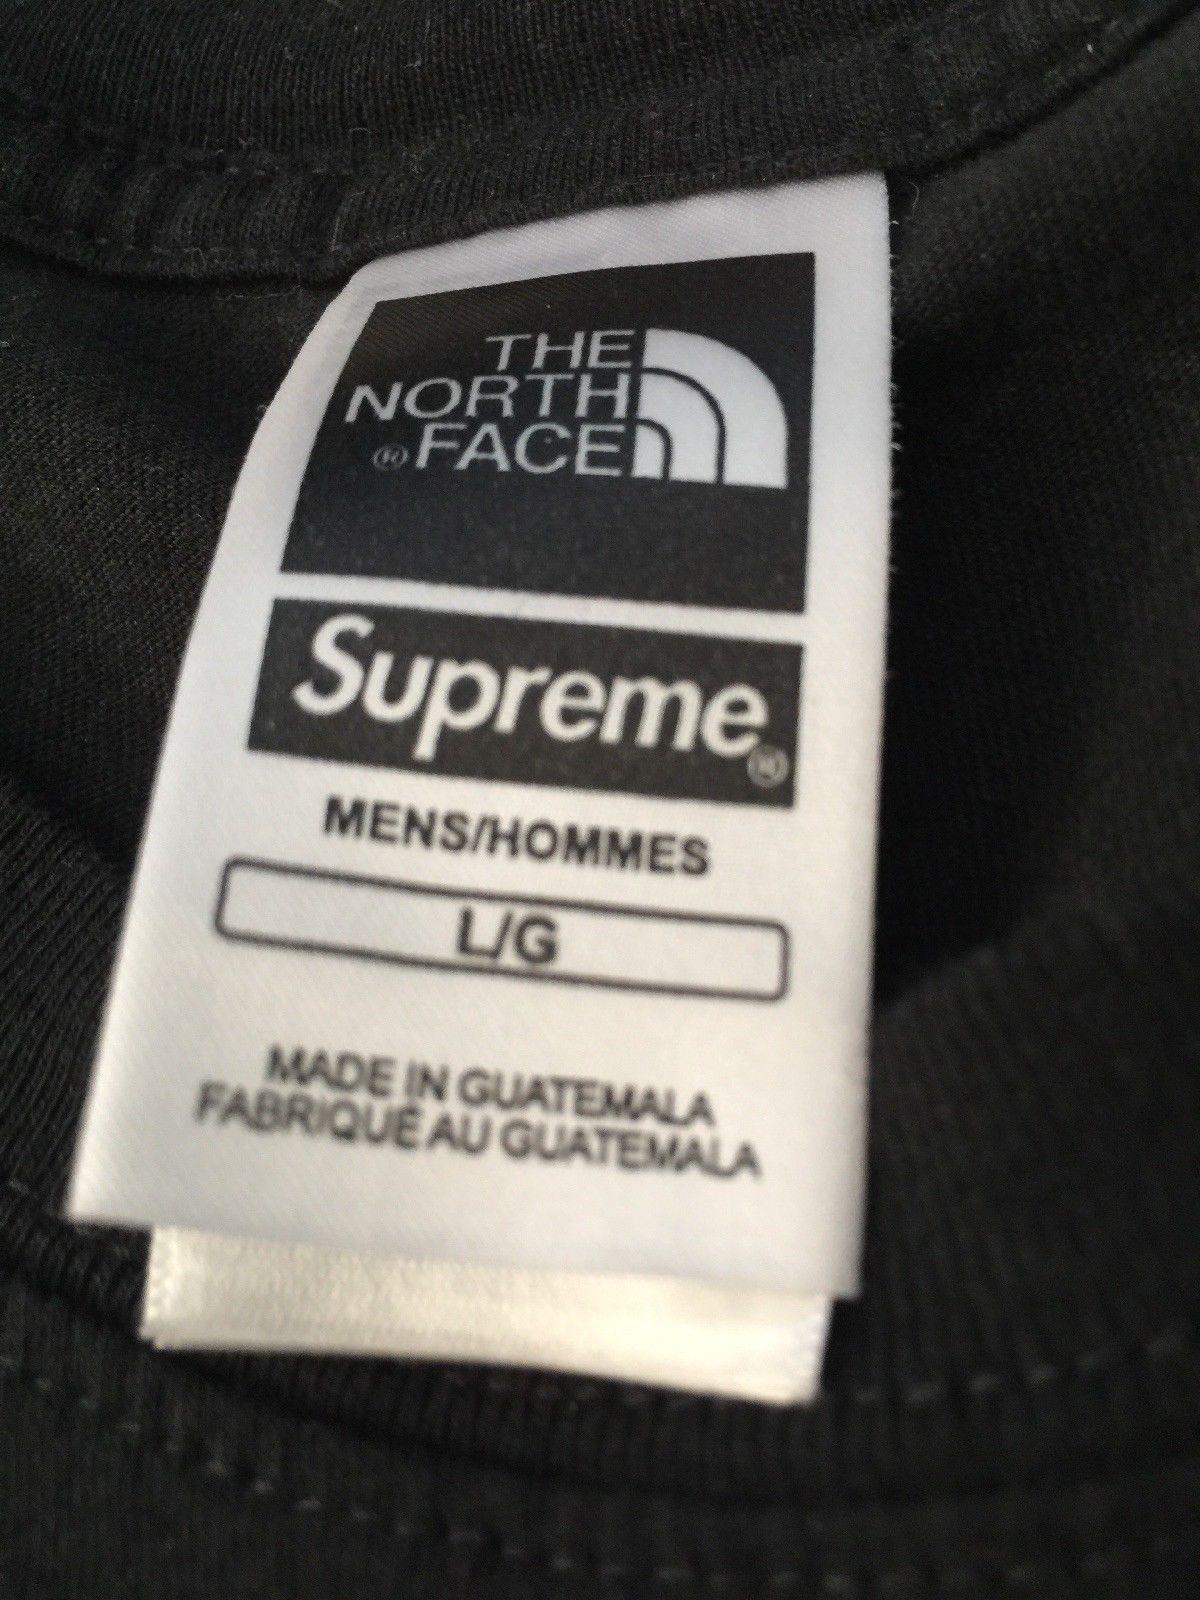 Supreme BAPE Polo Logo - Details about Supreme 18SS THE NORTH FACE metallic logo T-shirt ...